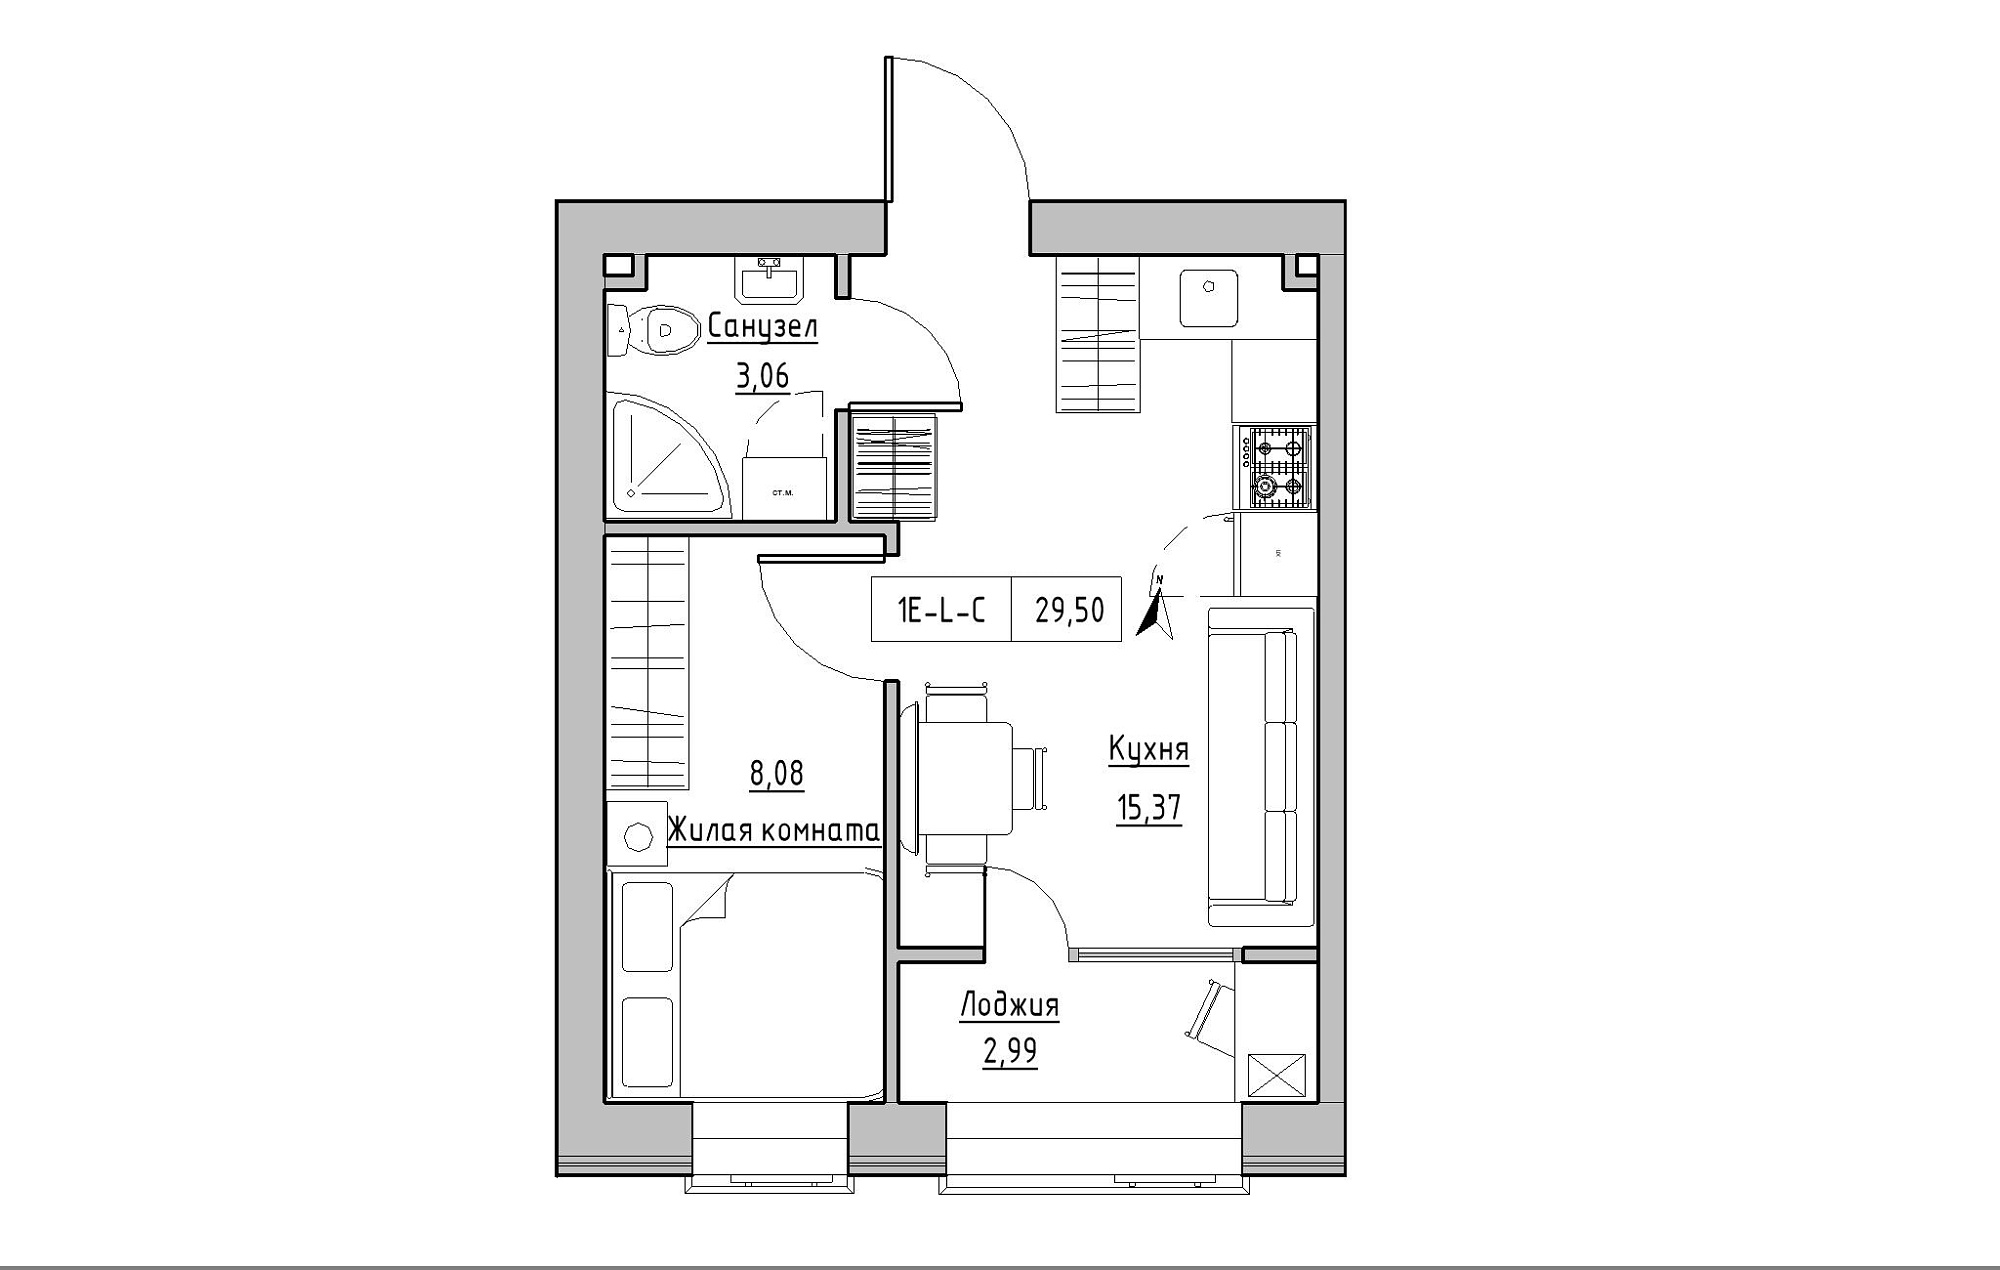 Planning 1-rm flats area 29.5m2, KS-019-03/0010.